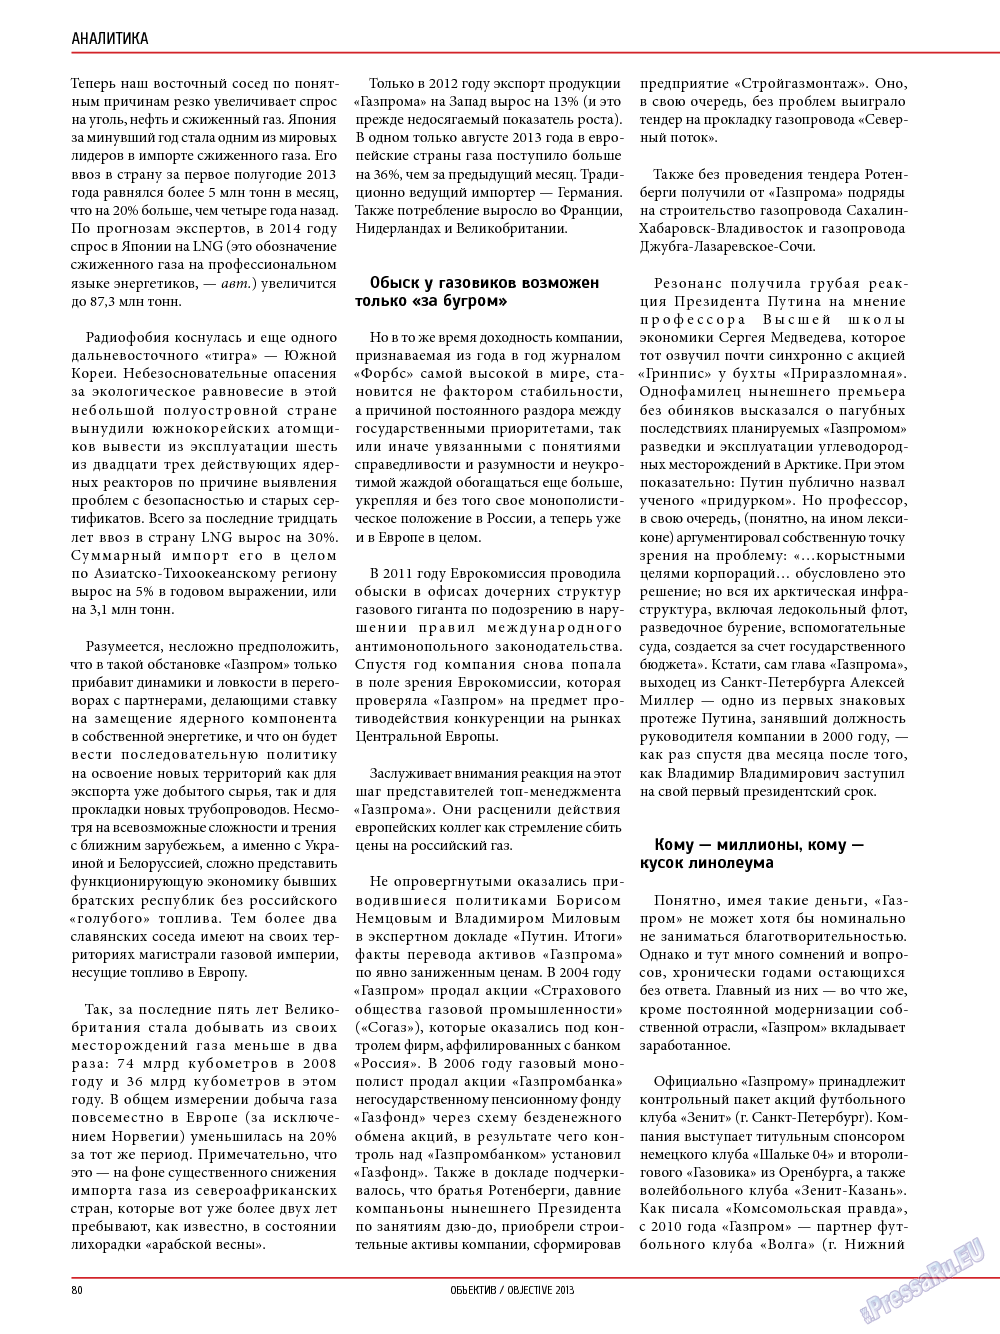 Объектив EU, журнал. 2013 №4 стр.80